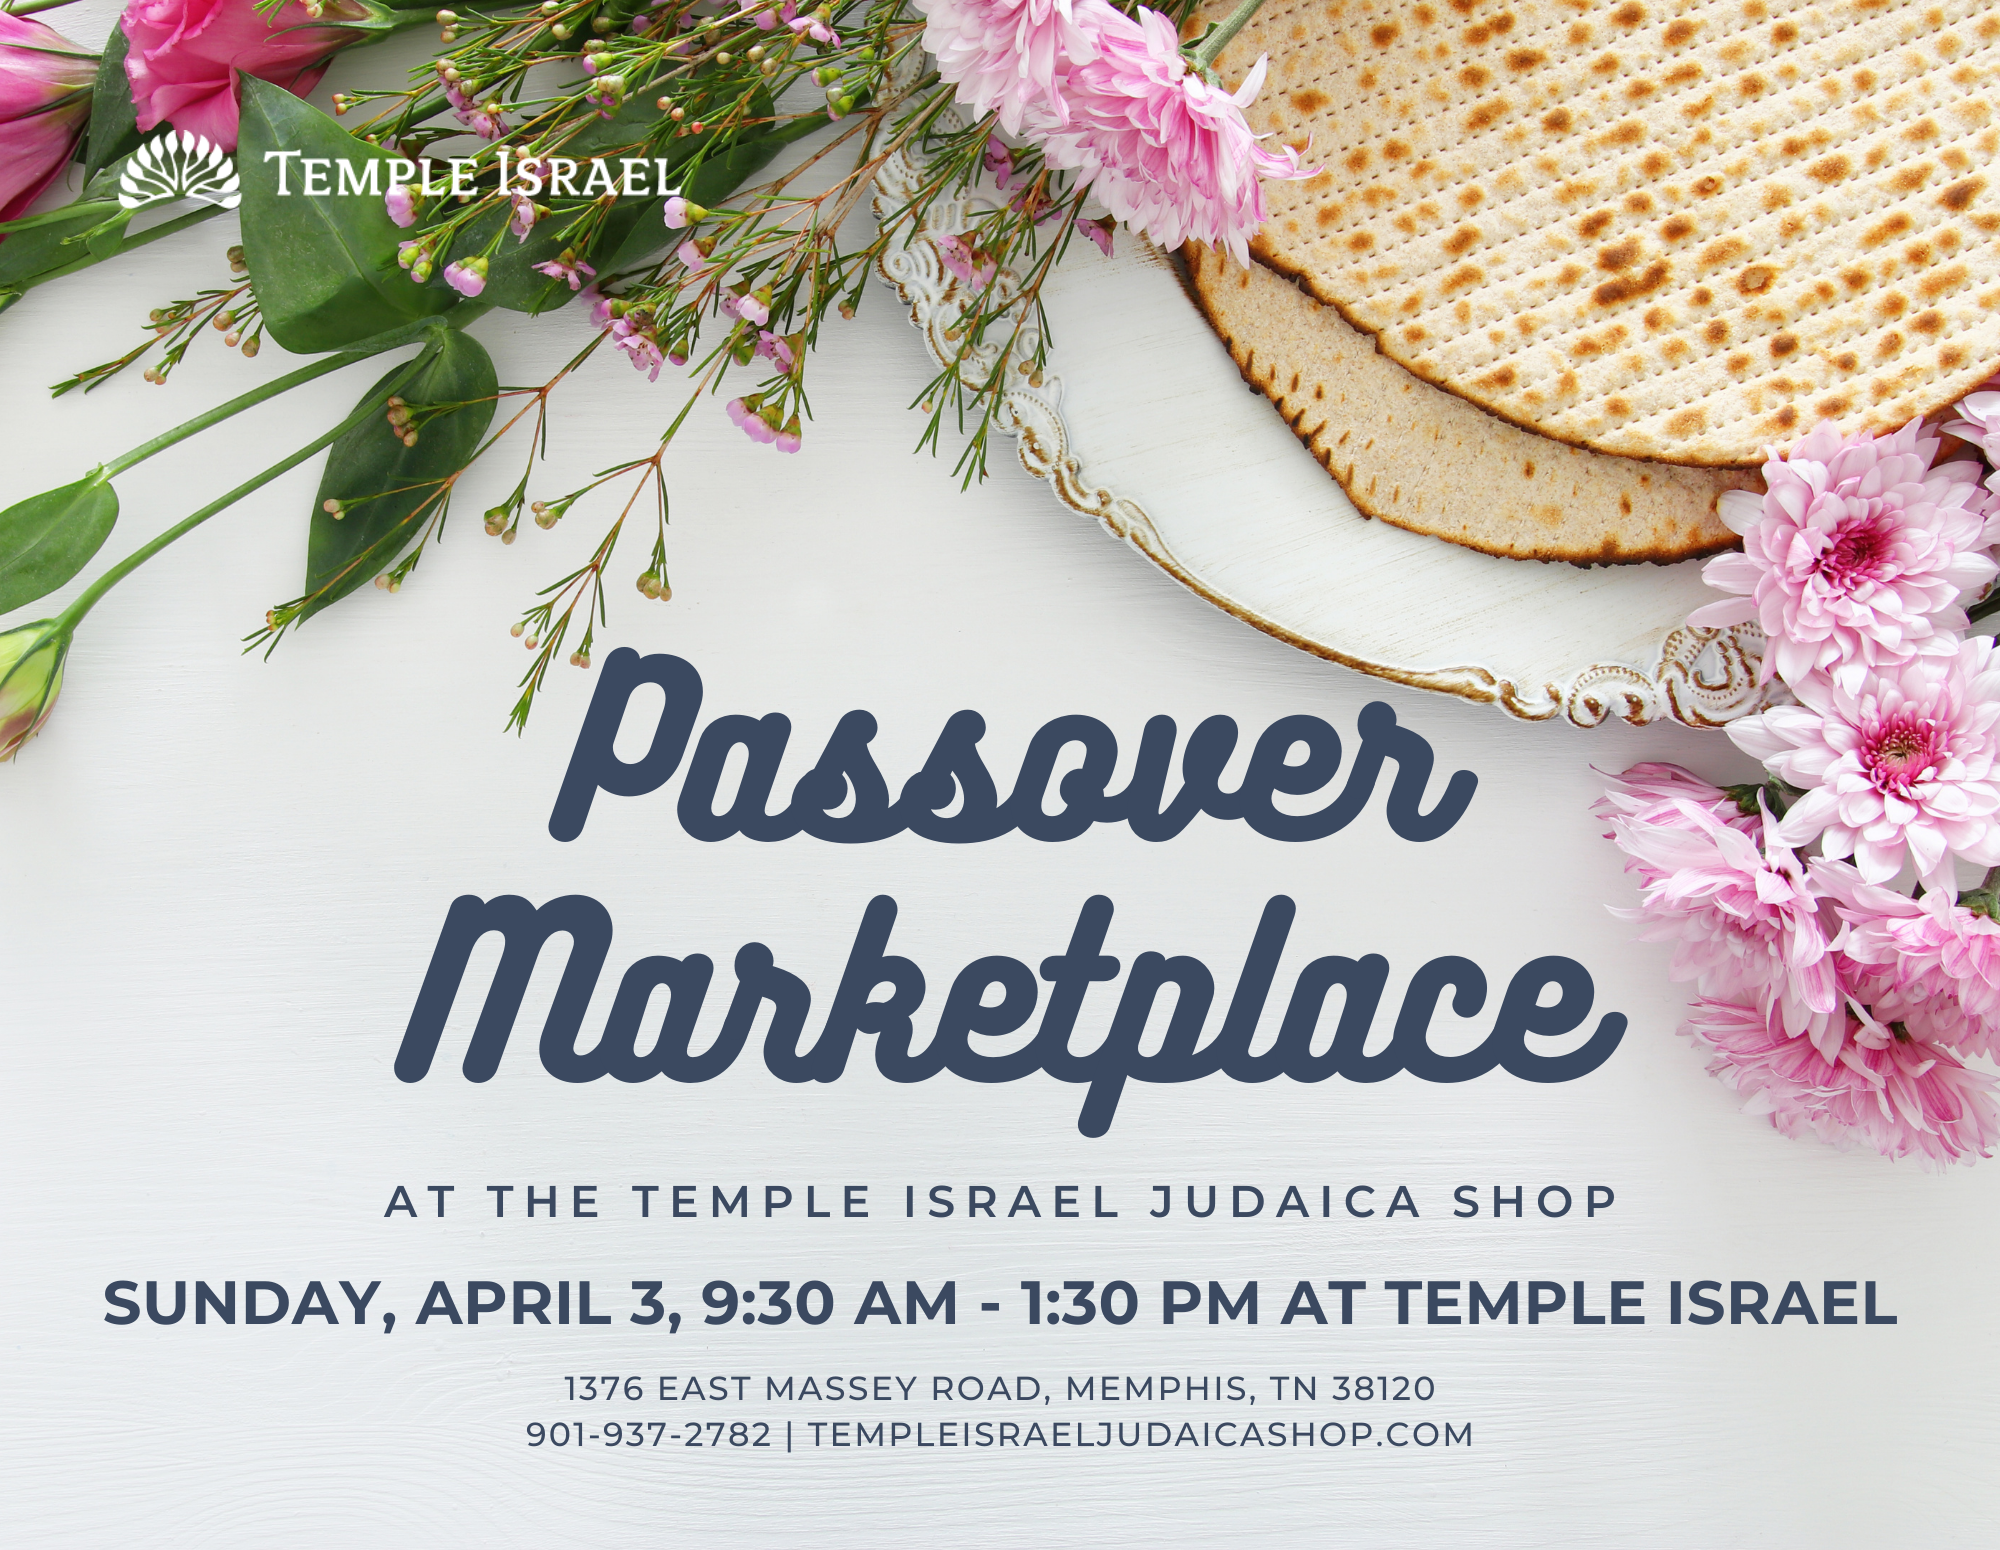 Passover Marketplace